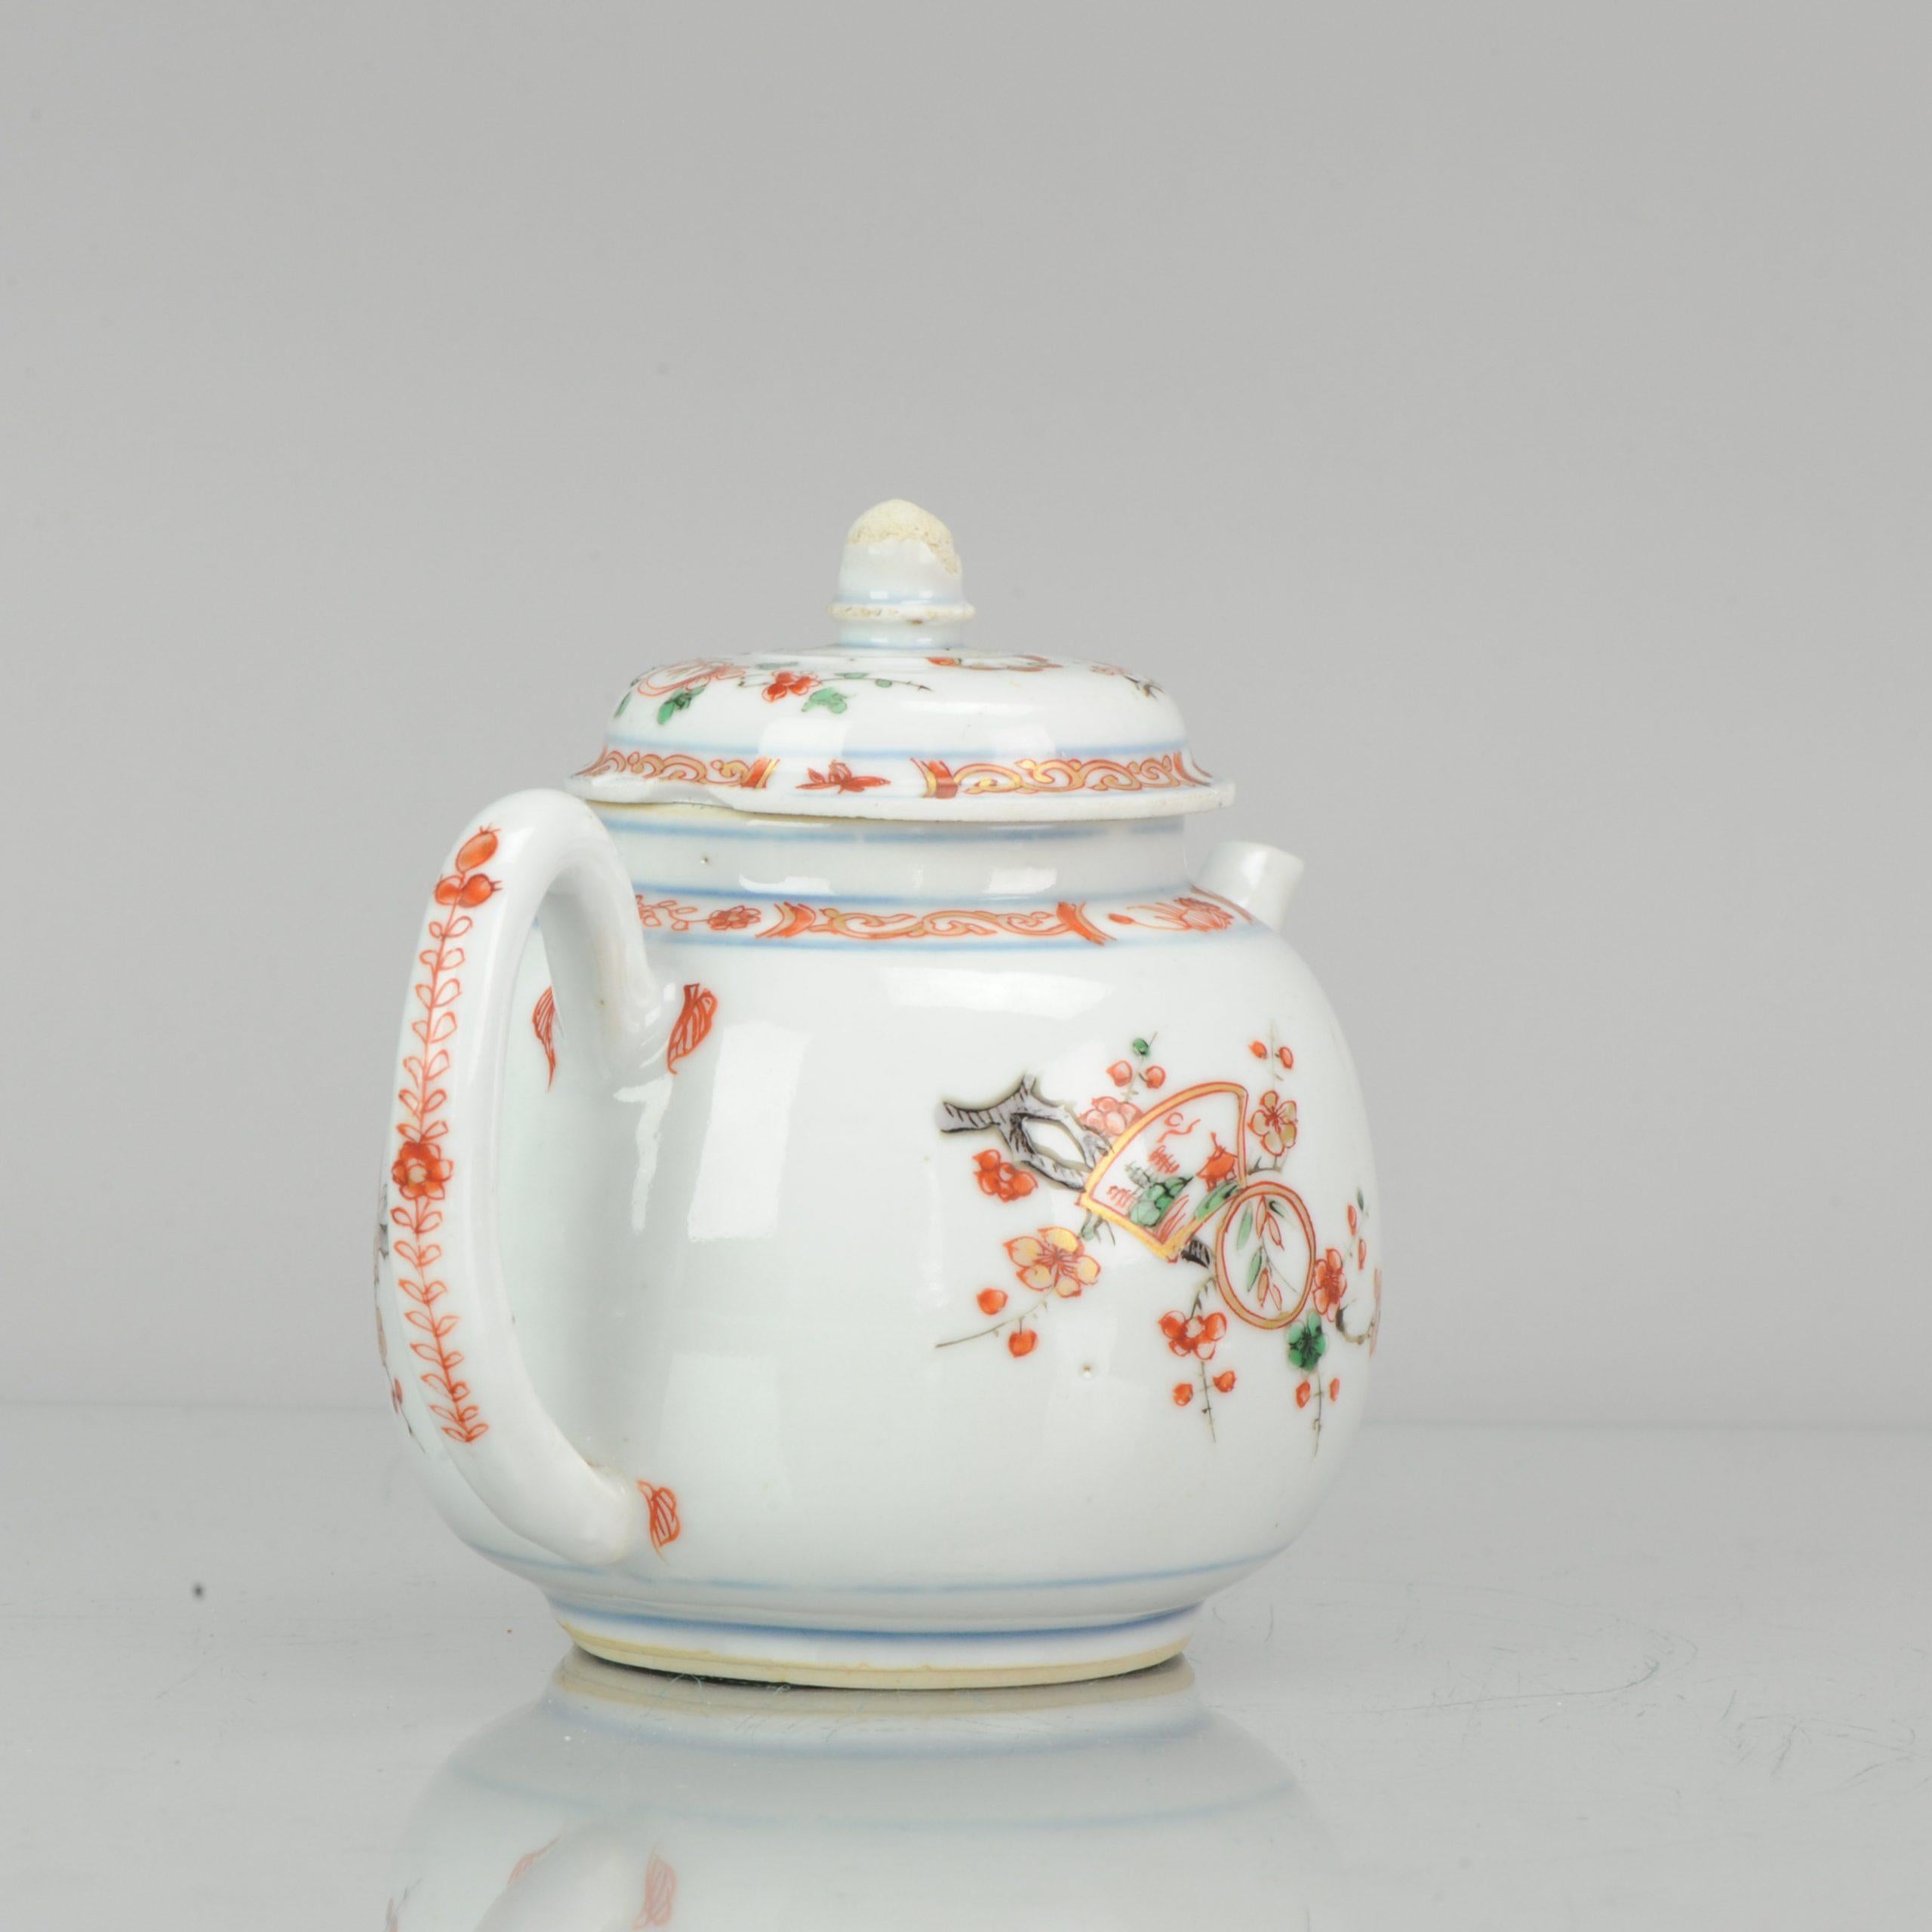 18th Century Antique Chinese Porcelain Kangxi Famille Verte Rare Decorated Teapot